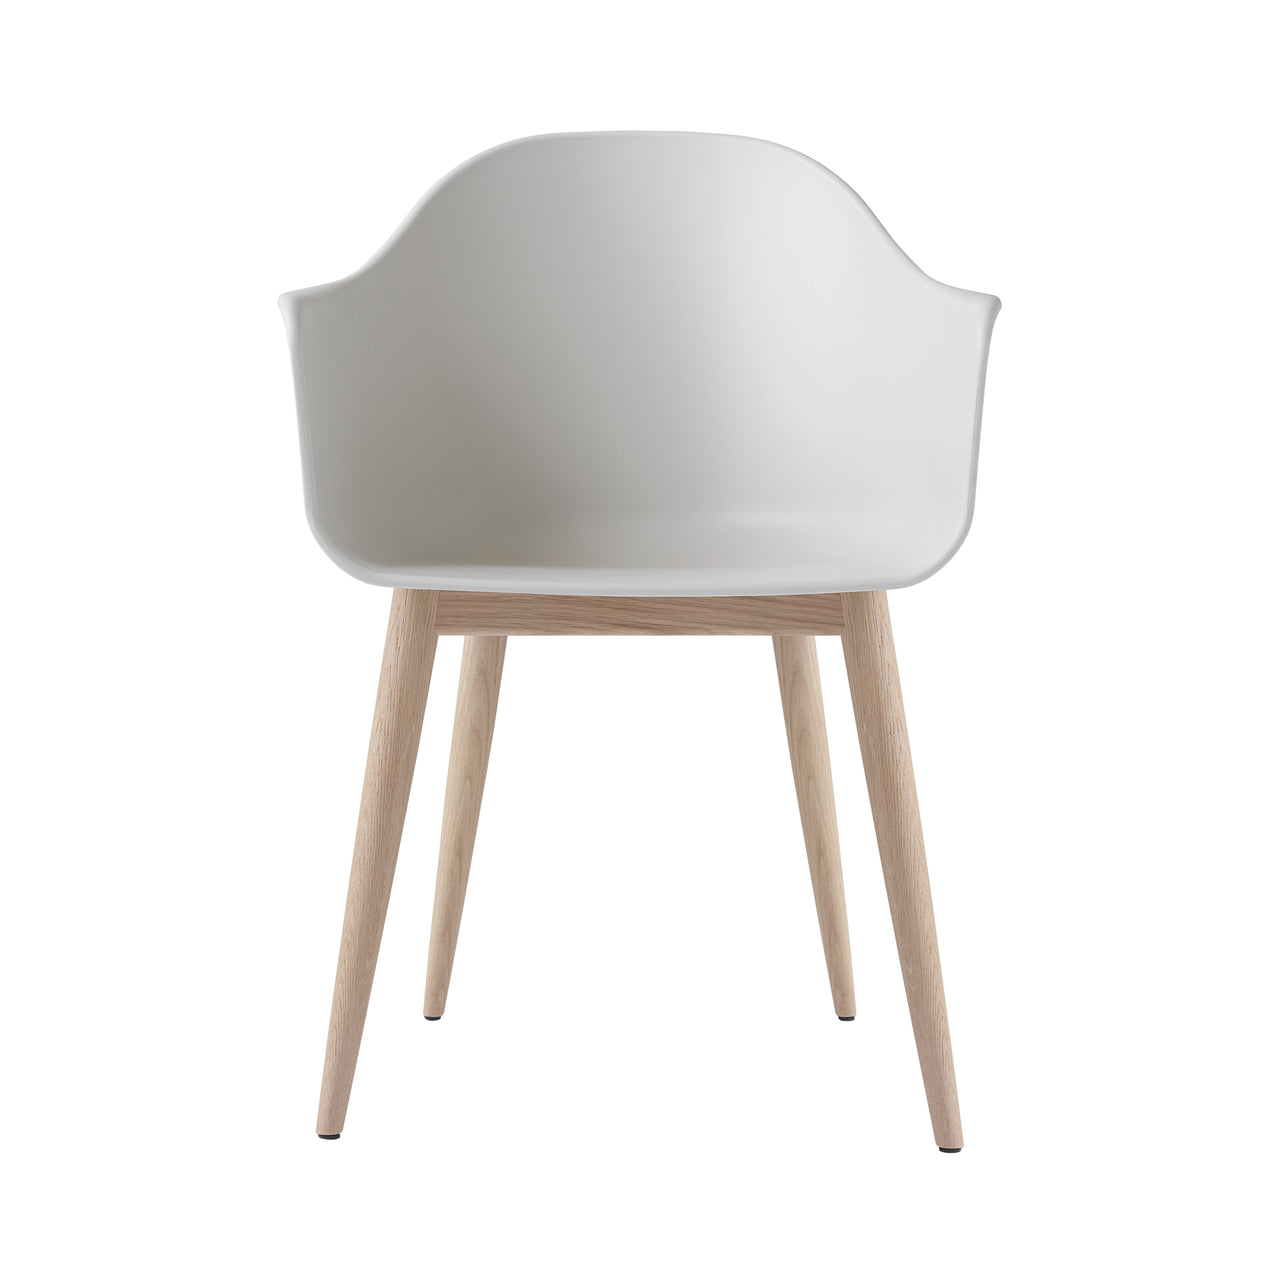 Harbour Dining Chair: Wood Base + Natural Oak + Light Grey